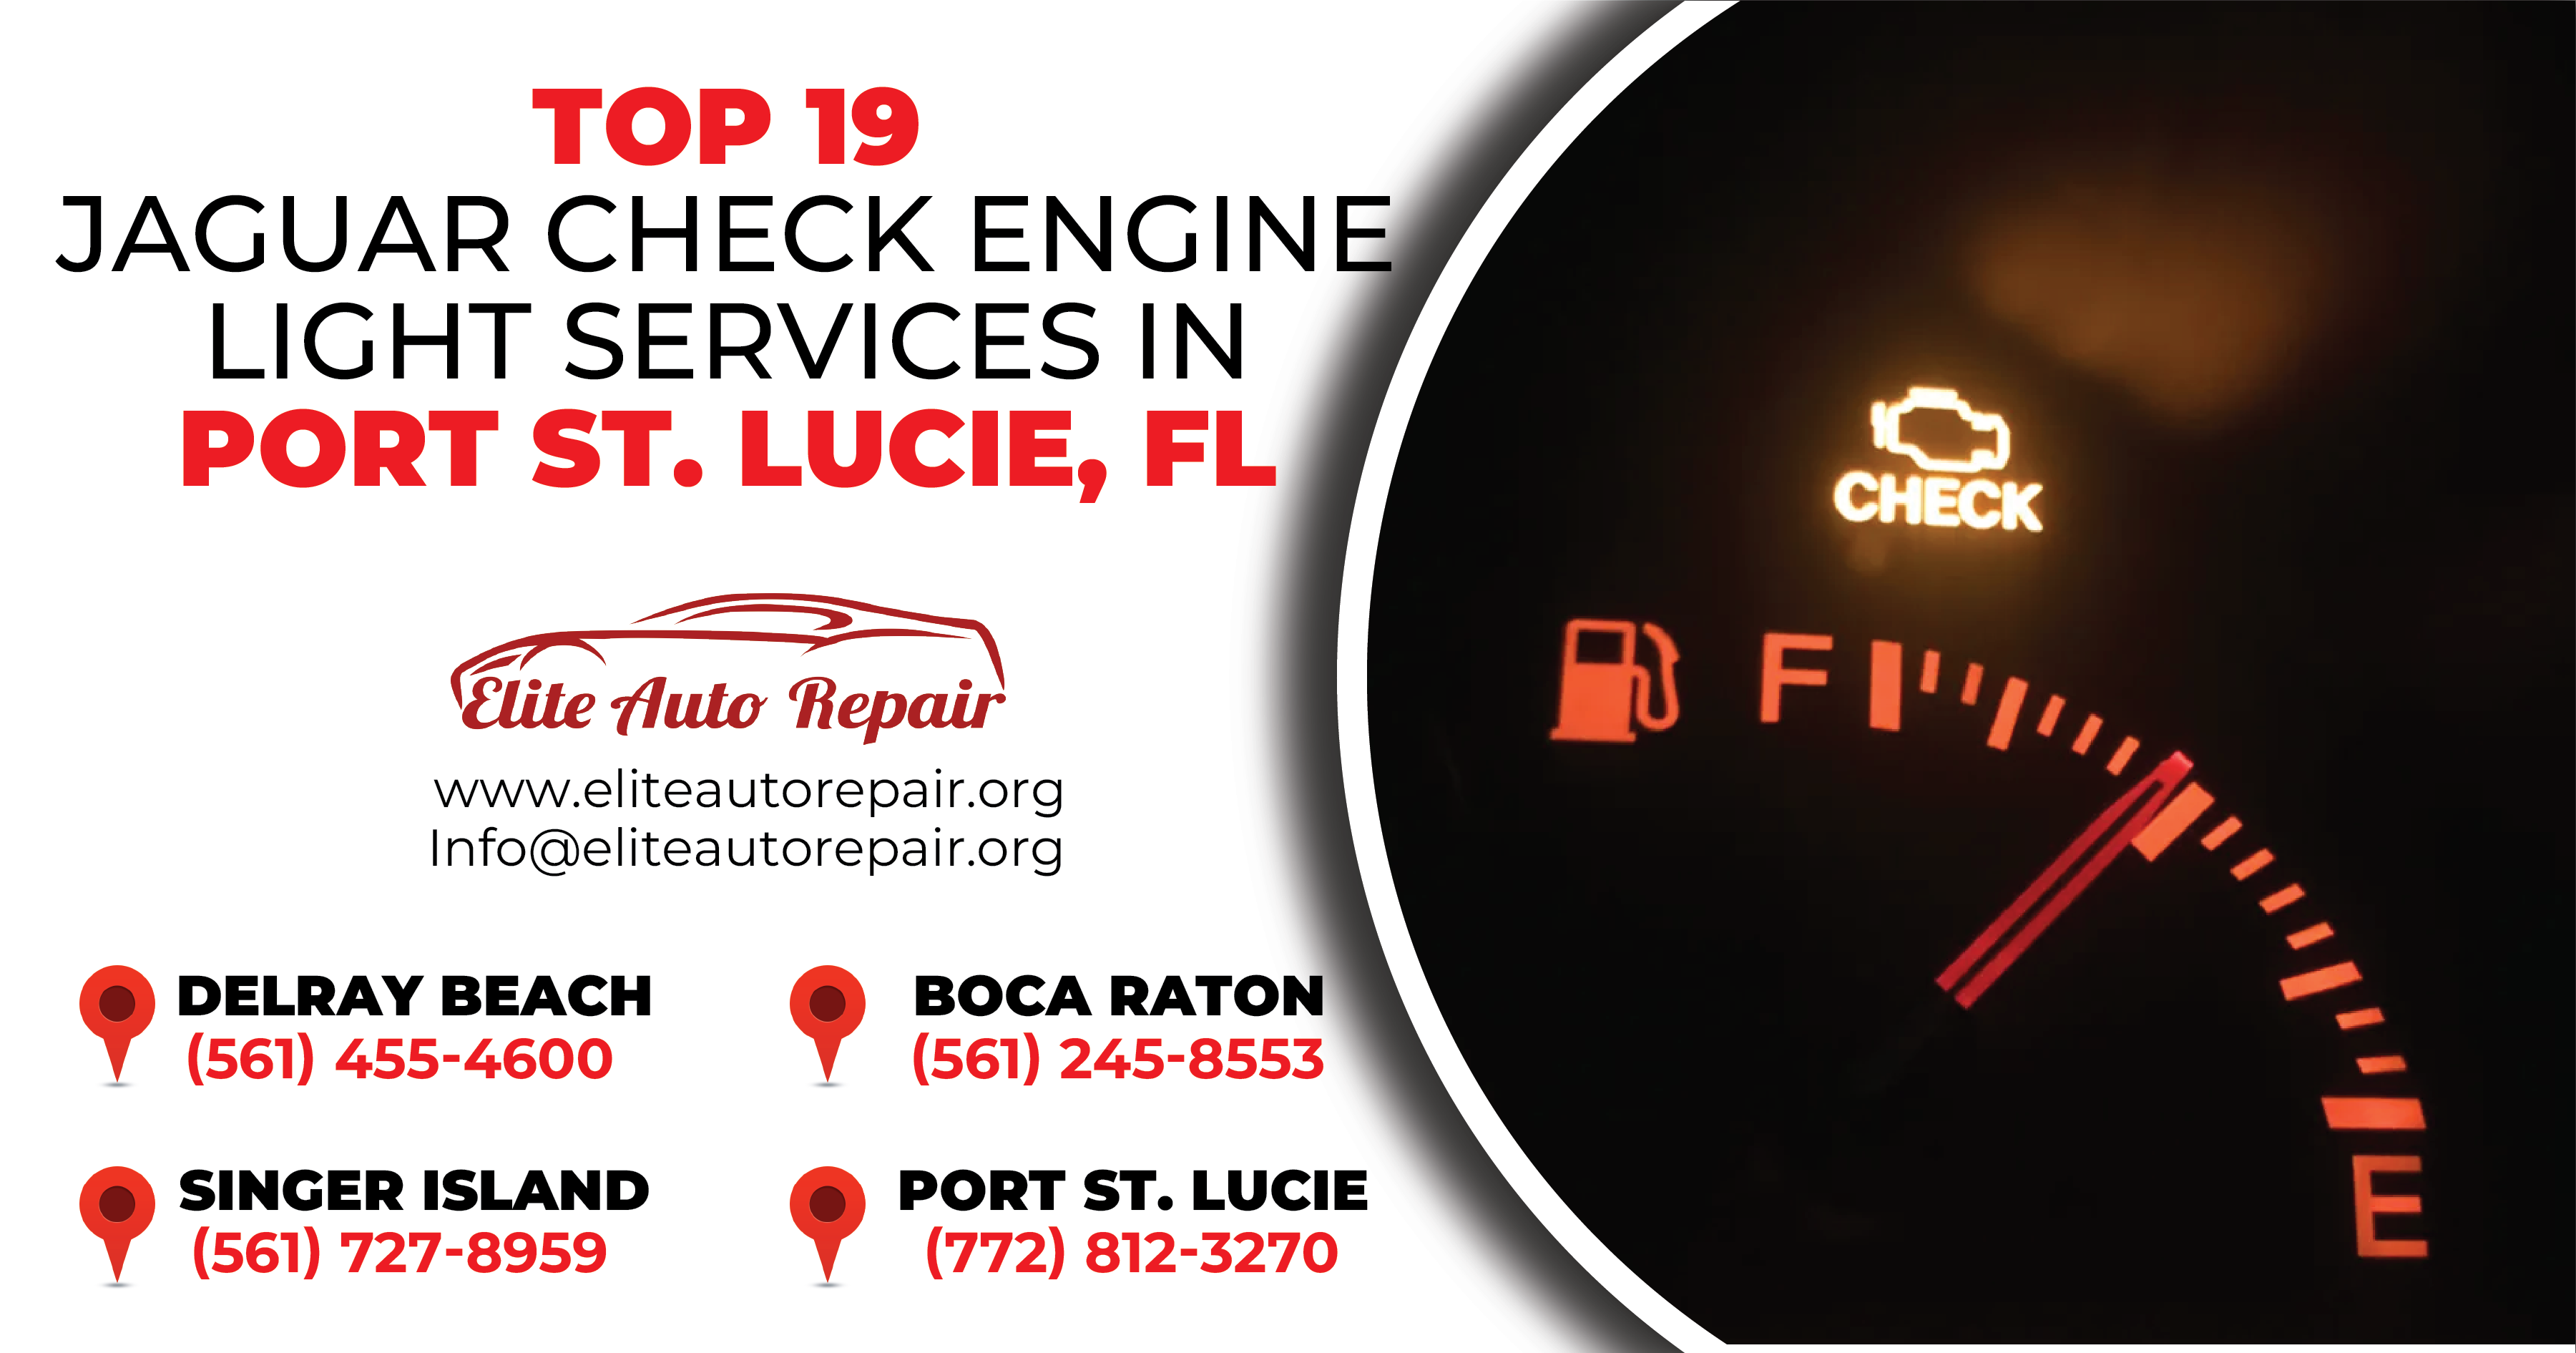 Top 19 Jaguar Check Engine Light Services in Port St. Lucie, FL